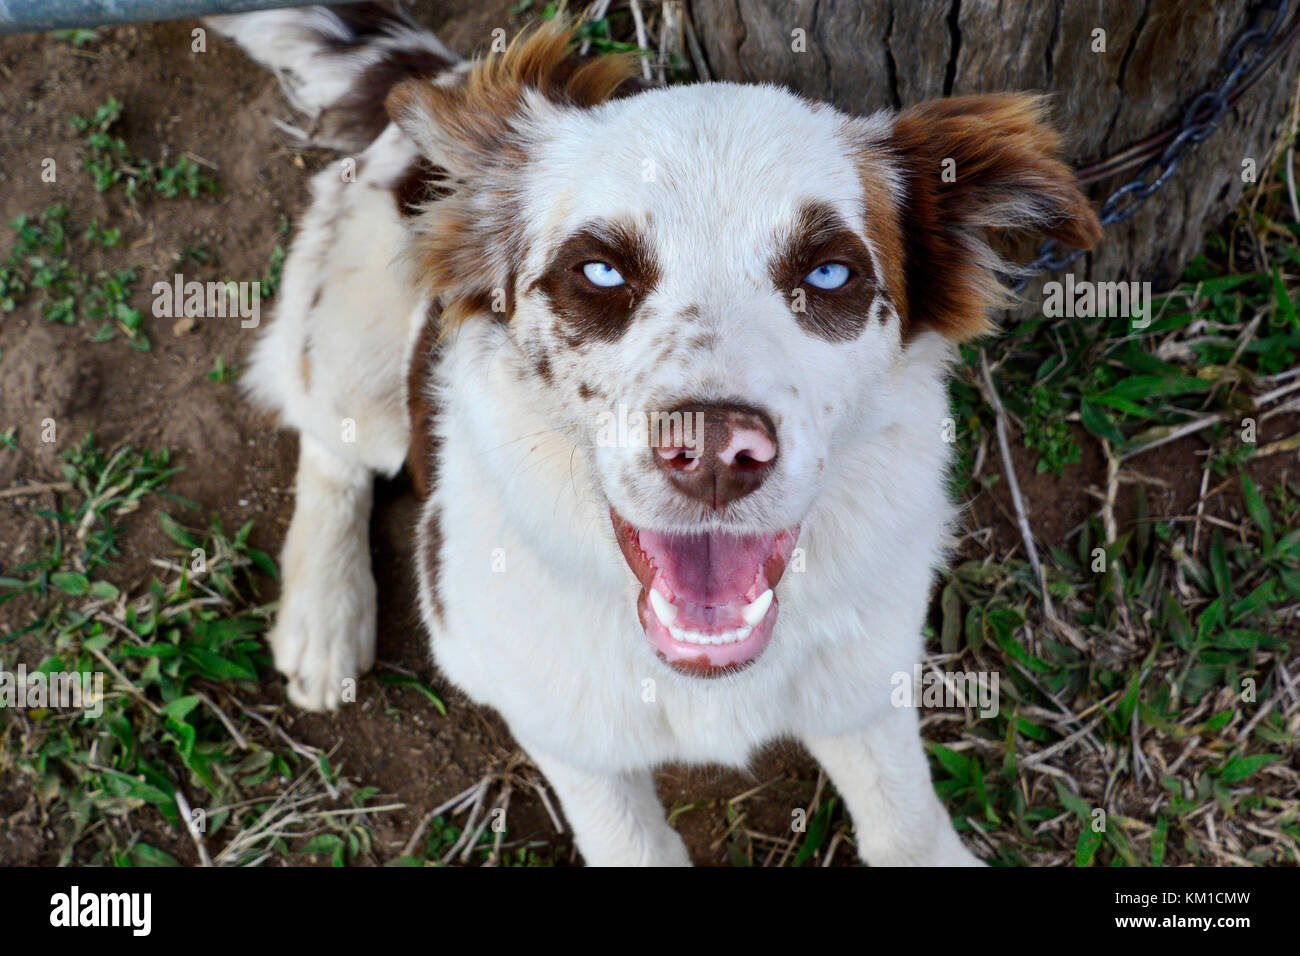 AUSTRALIAN CATTLE DOGS, BEST MATES Stock Photo Alamy